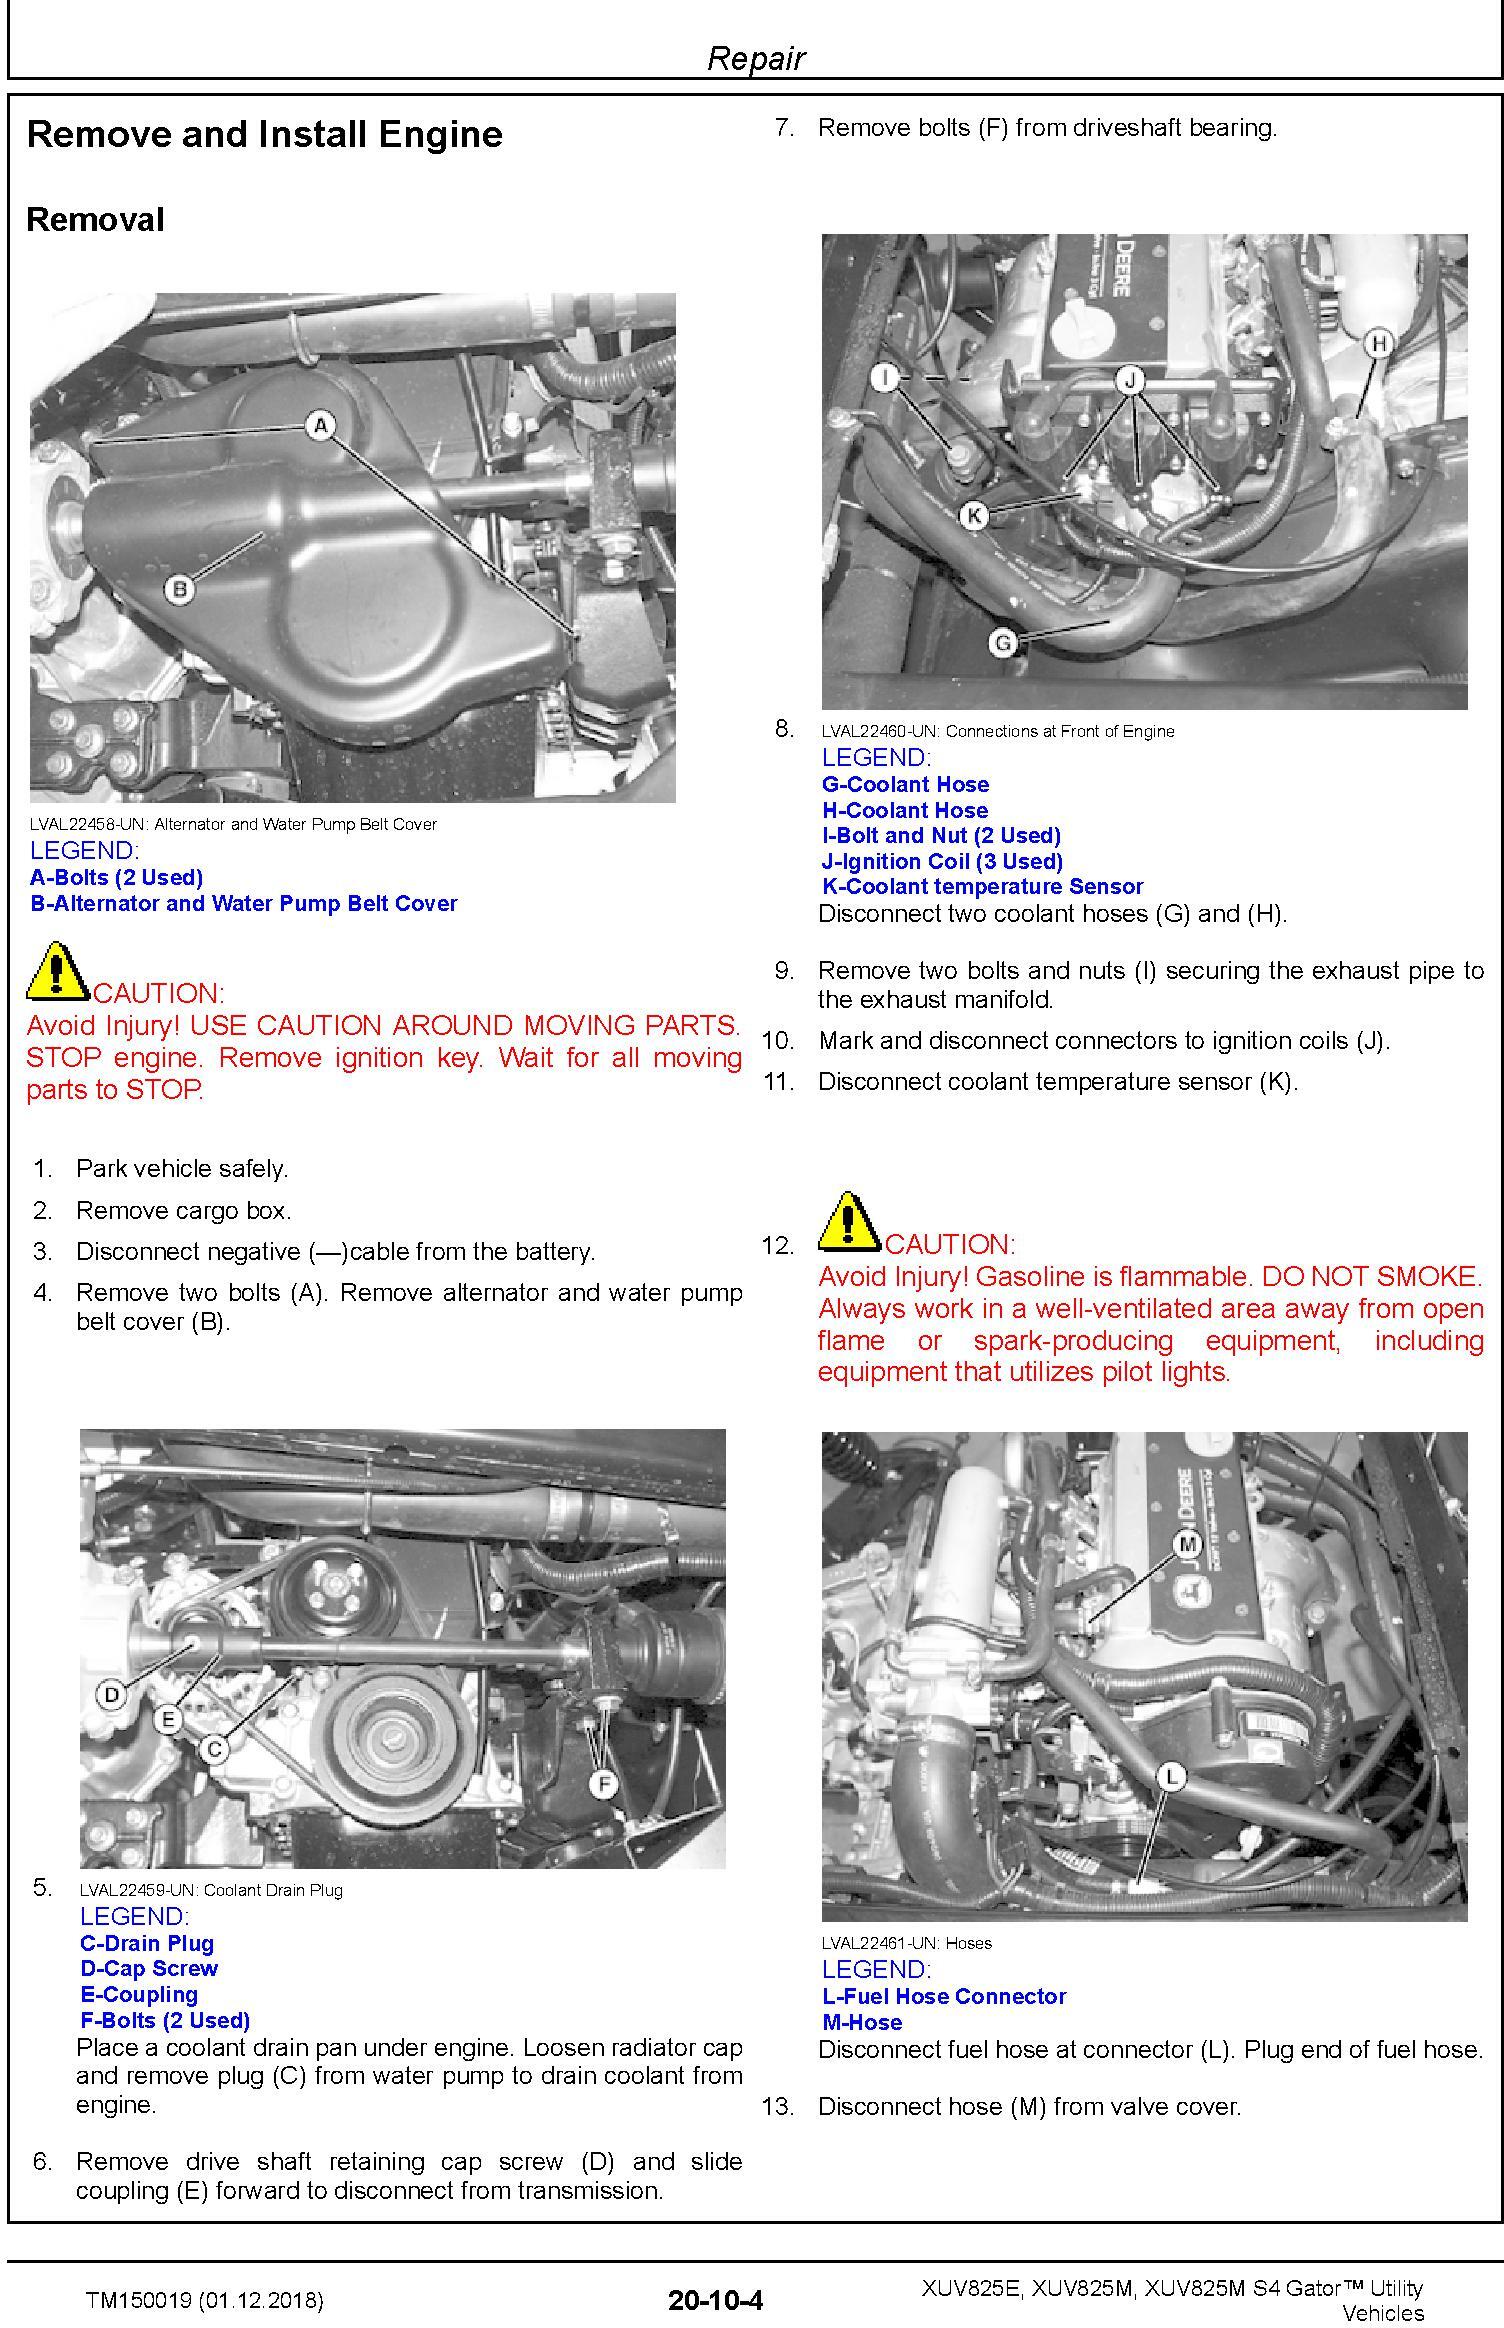 John Deere XUV825E XUV825M, XUV825M S4 Gator Utility Vehicles (SN.010001-) Technical Manual TM150019 - 1